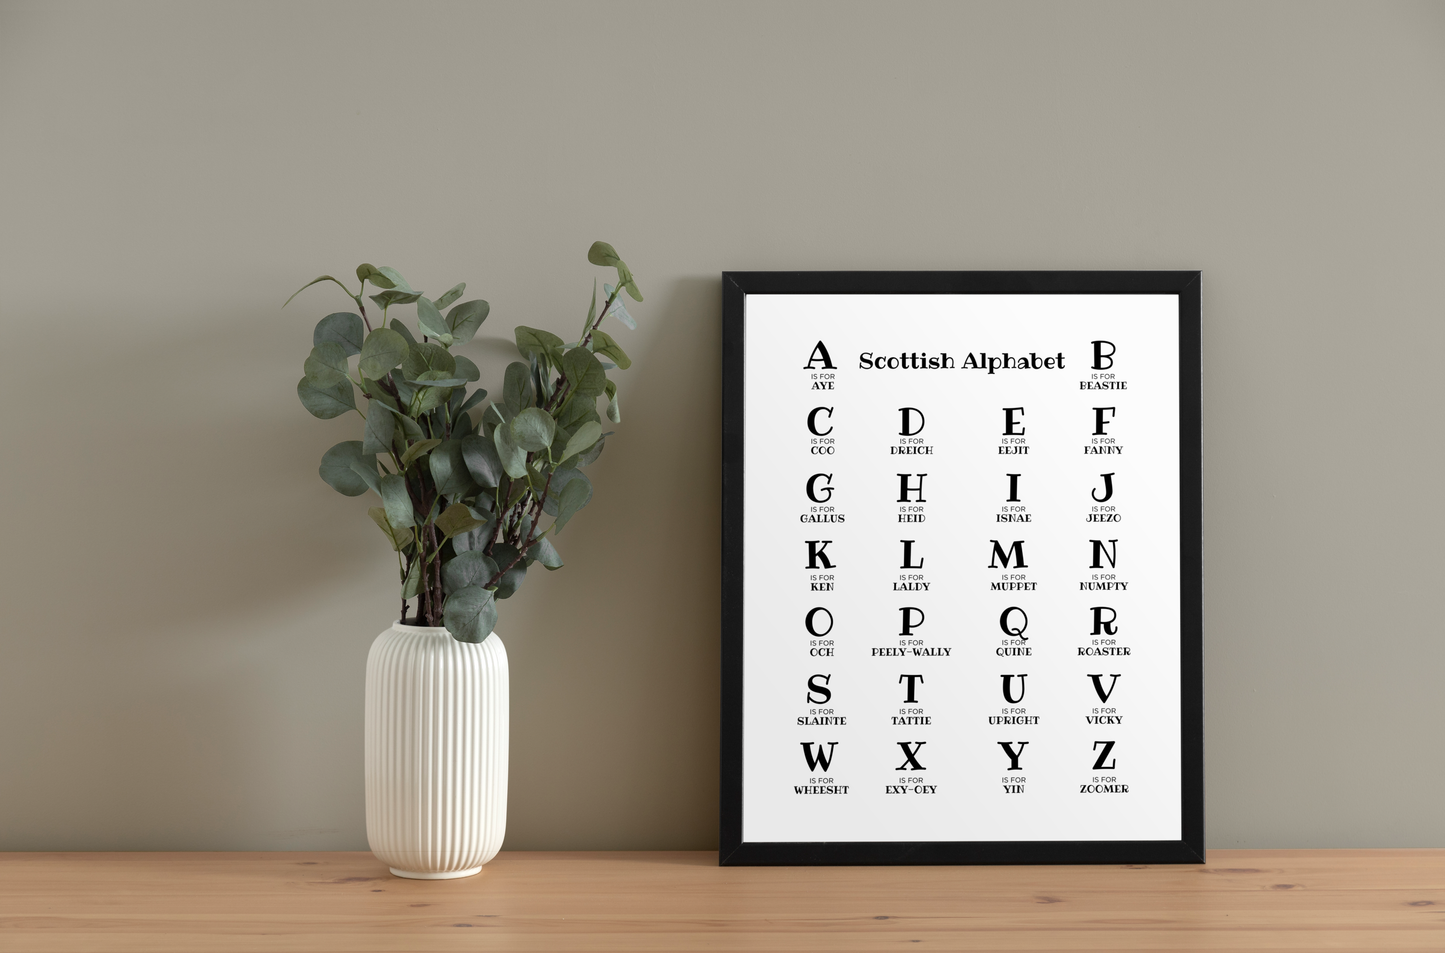 The Scottish Alphabet